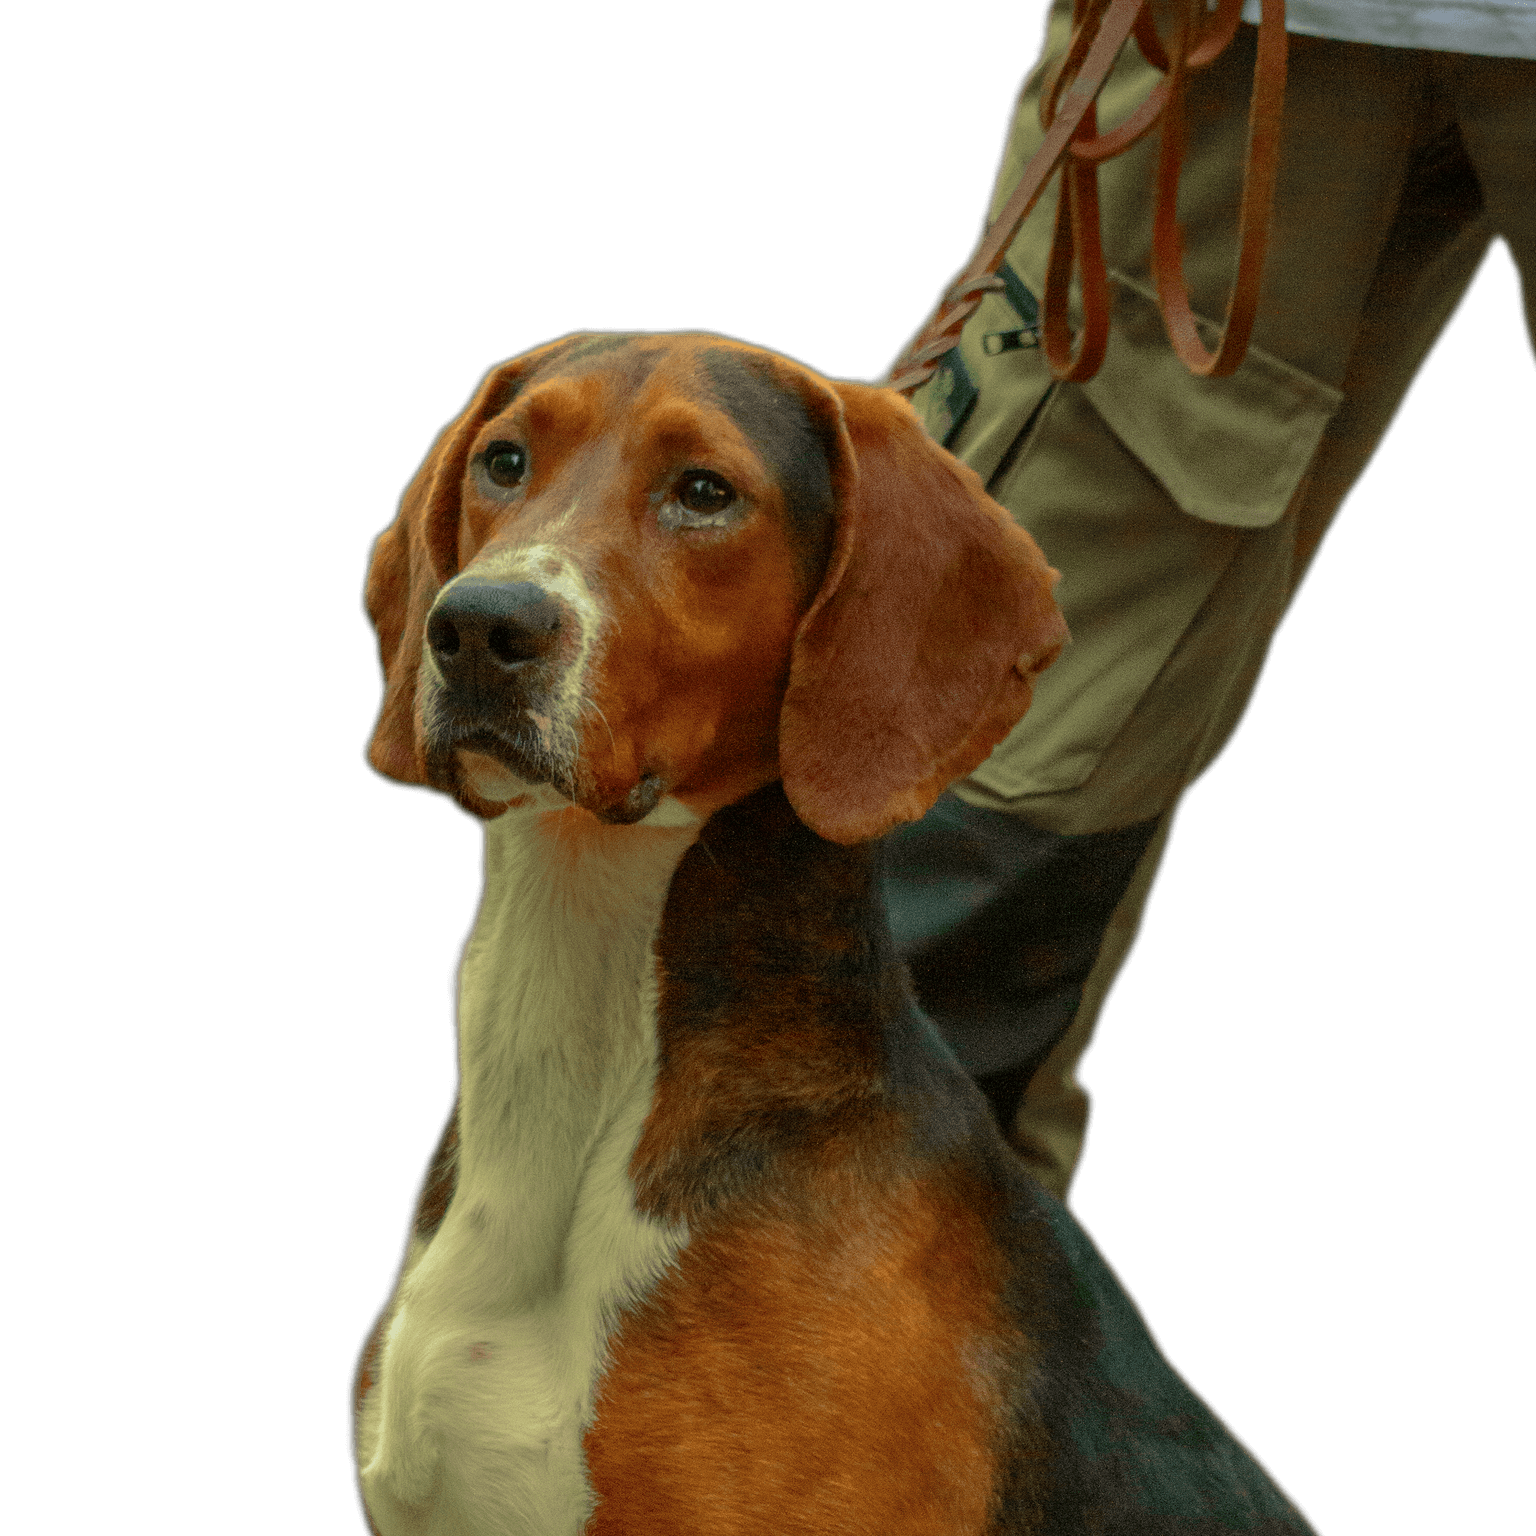 Serbian tri-colored hound portrait